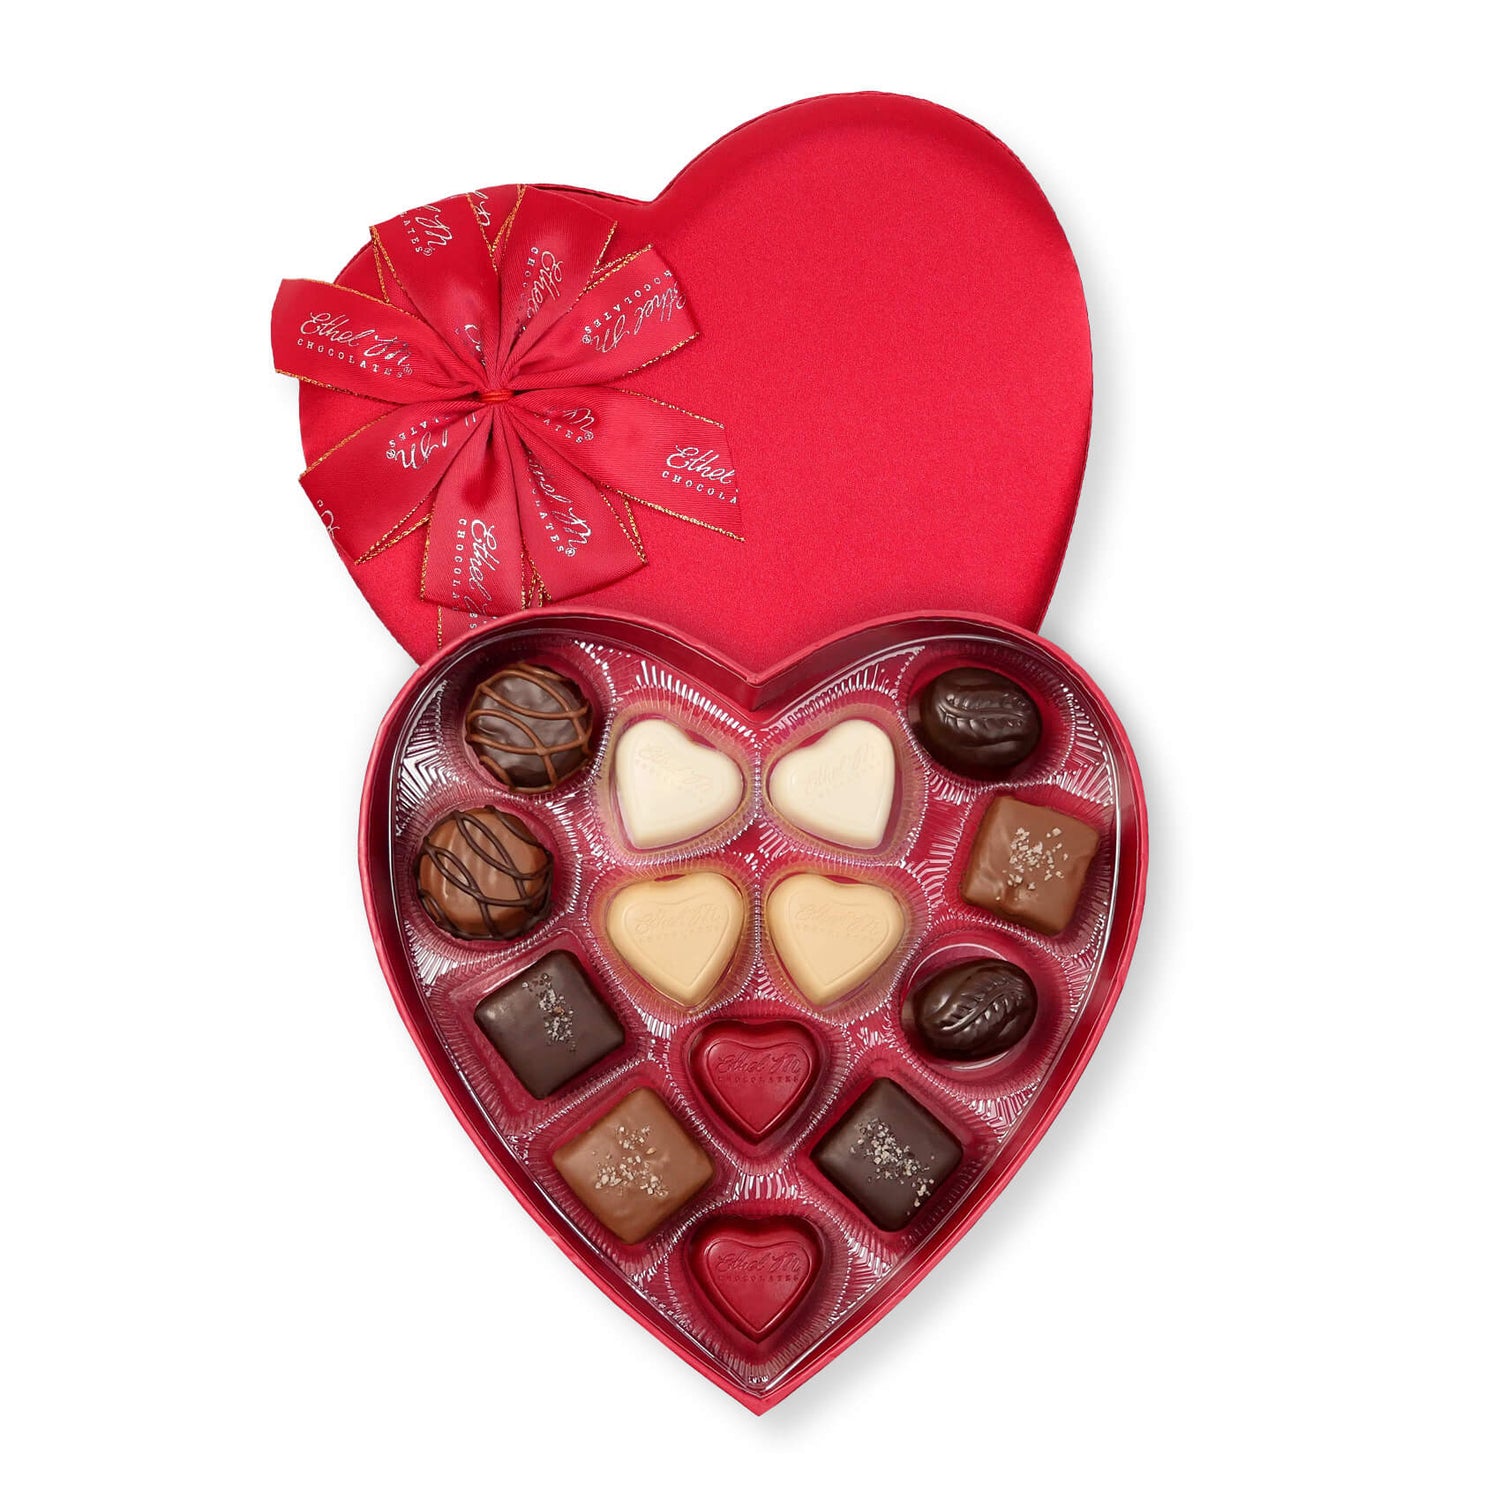 Hey sweetie - valentine's day chocolate box in heart shape. Stock